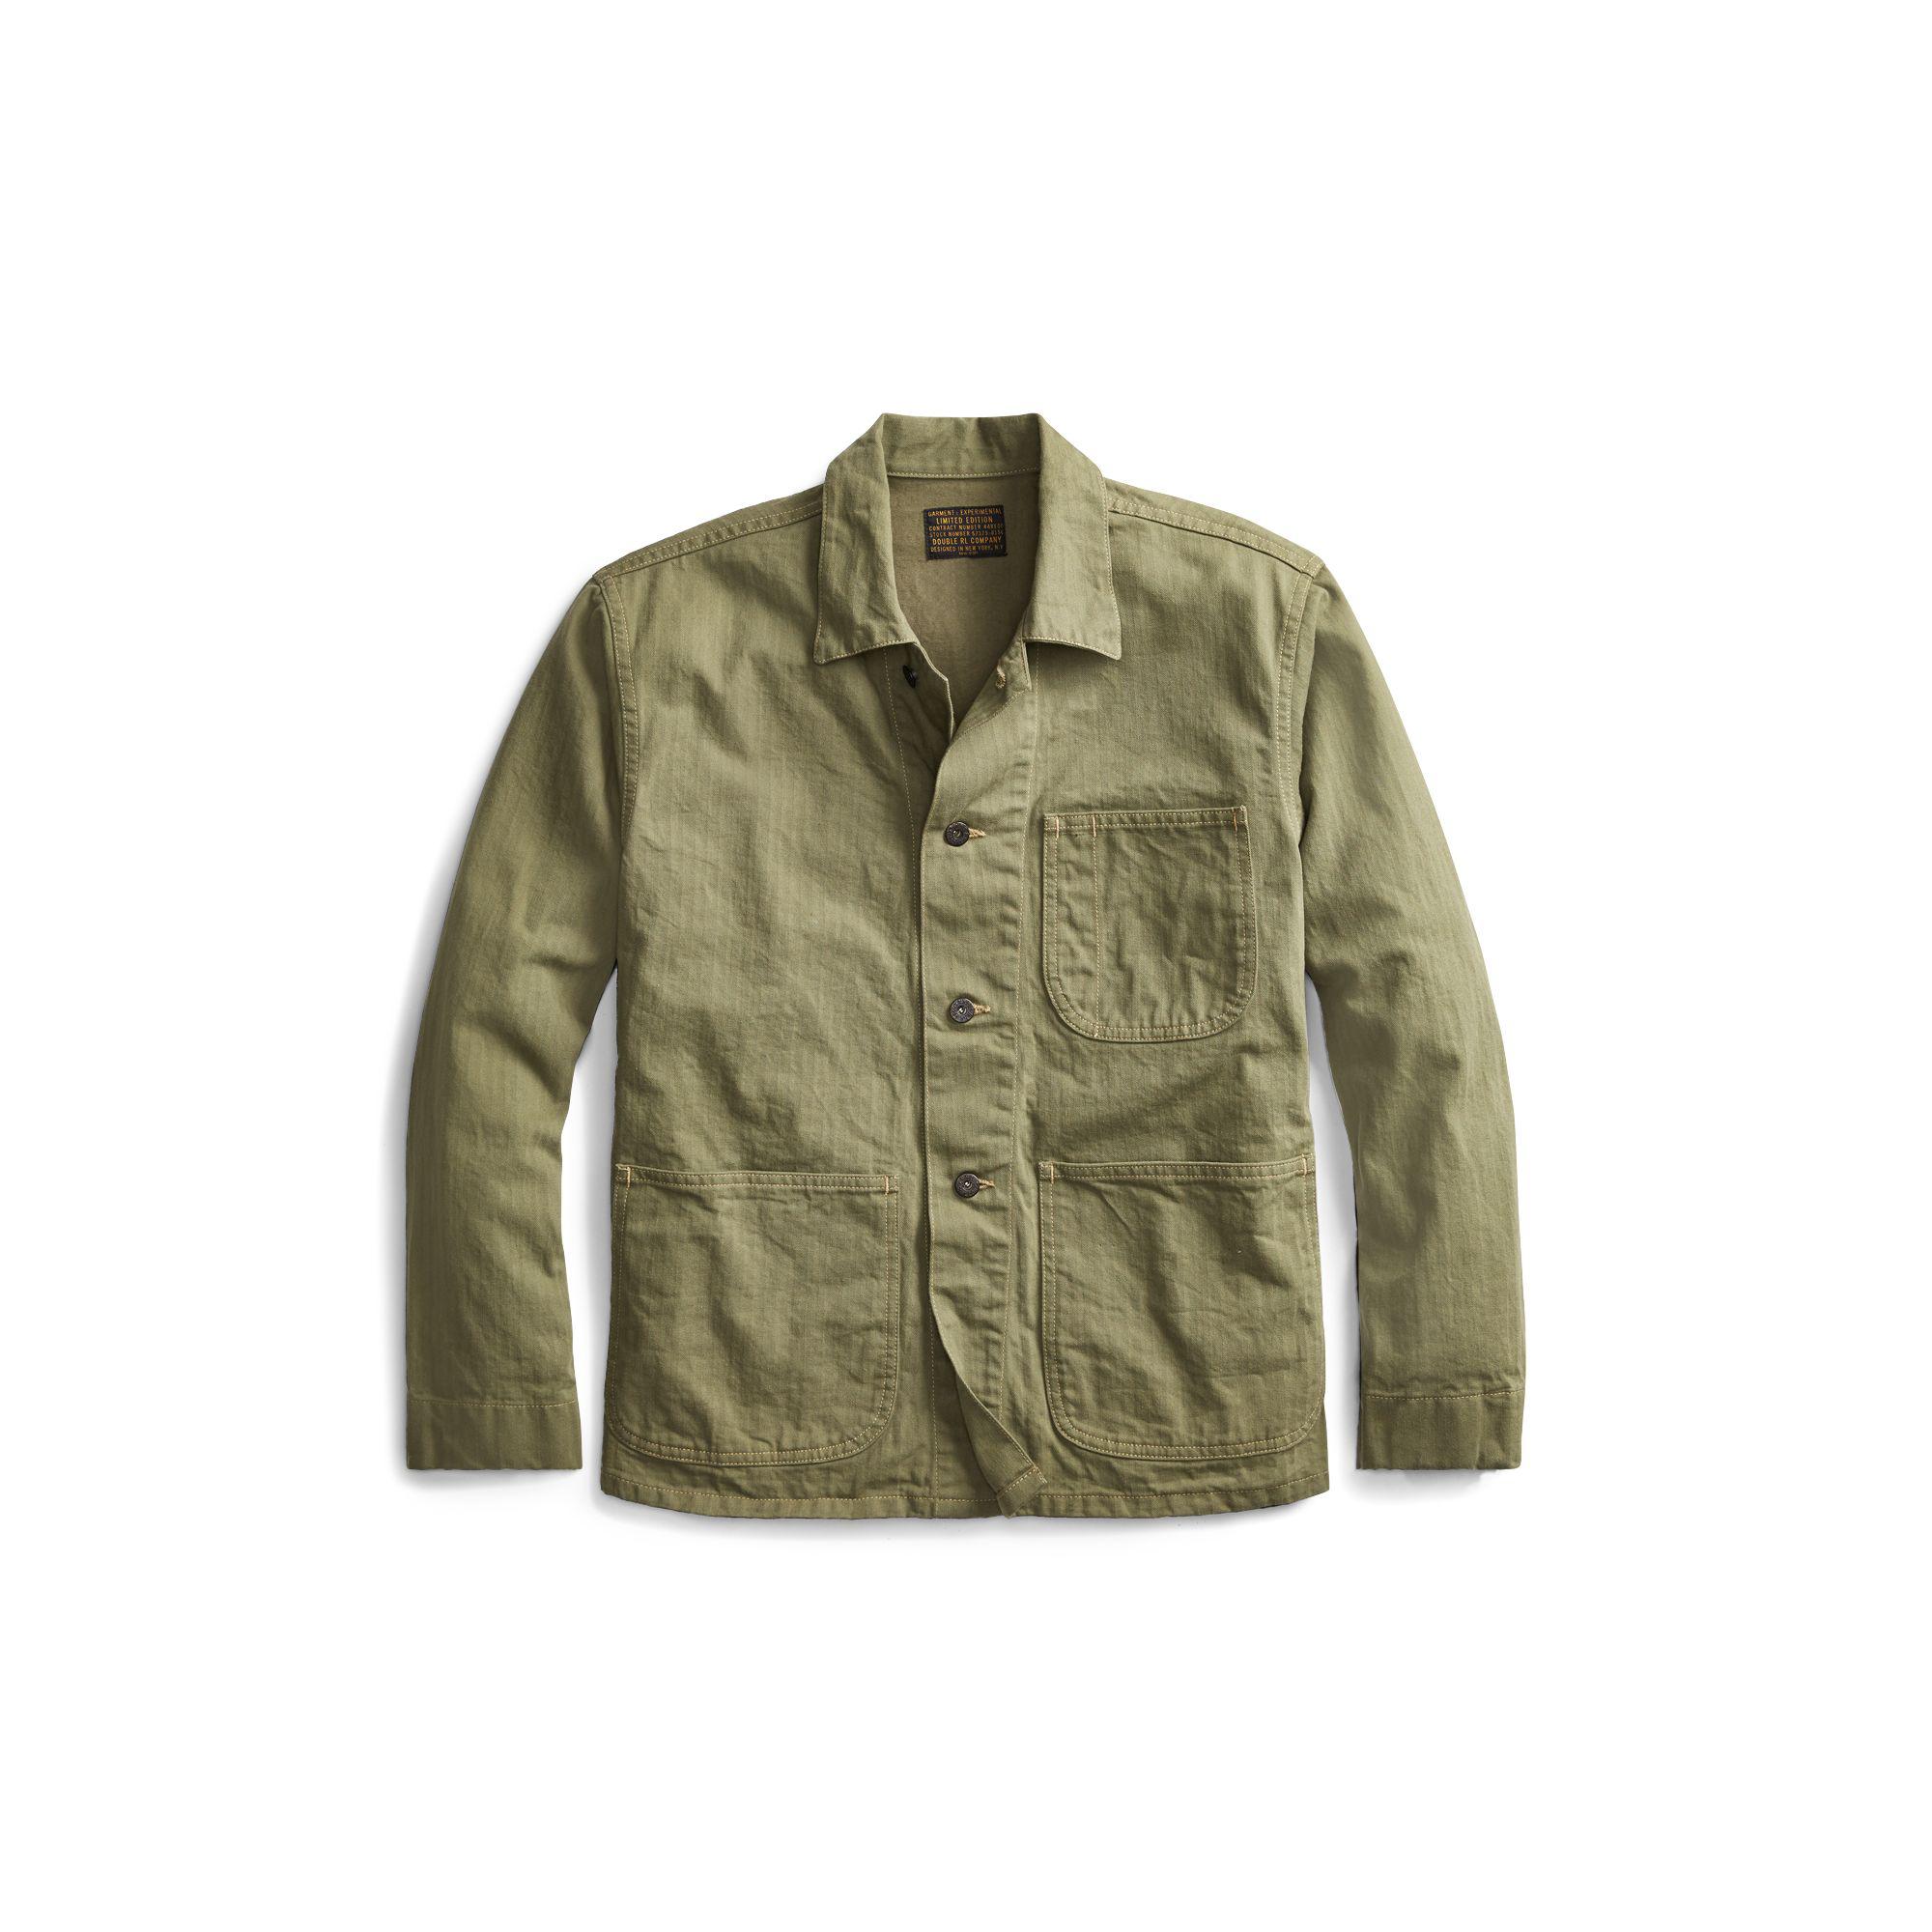 RRL Cotton Herringbone Jacket in Green for Men - Lyst